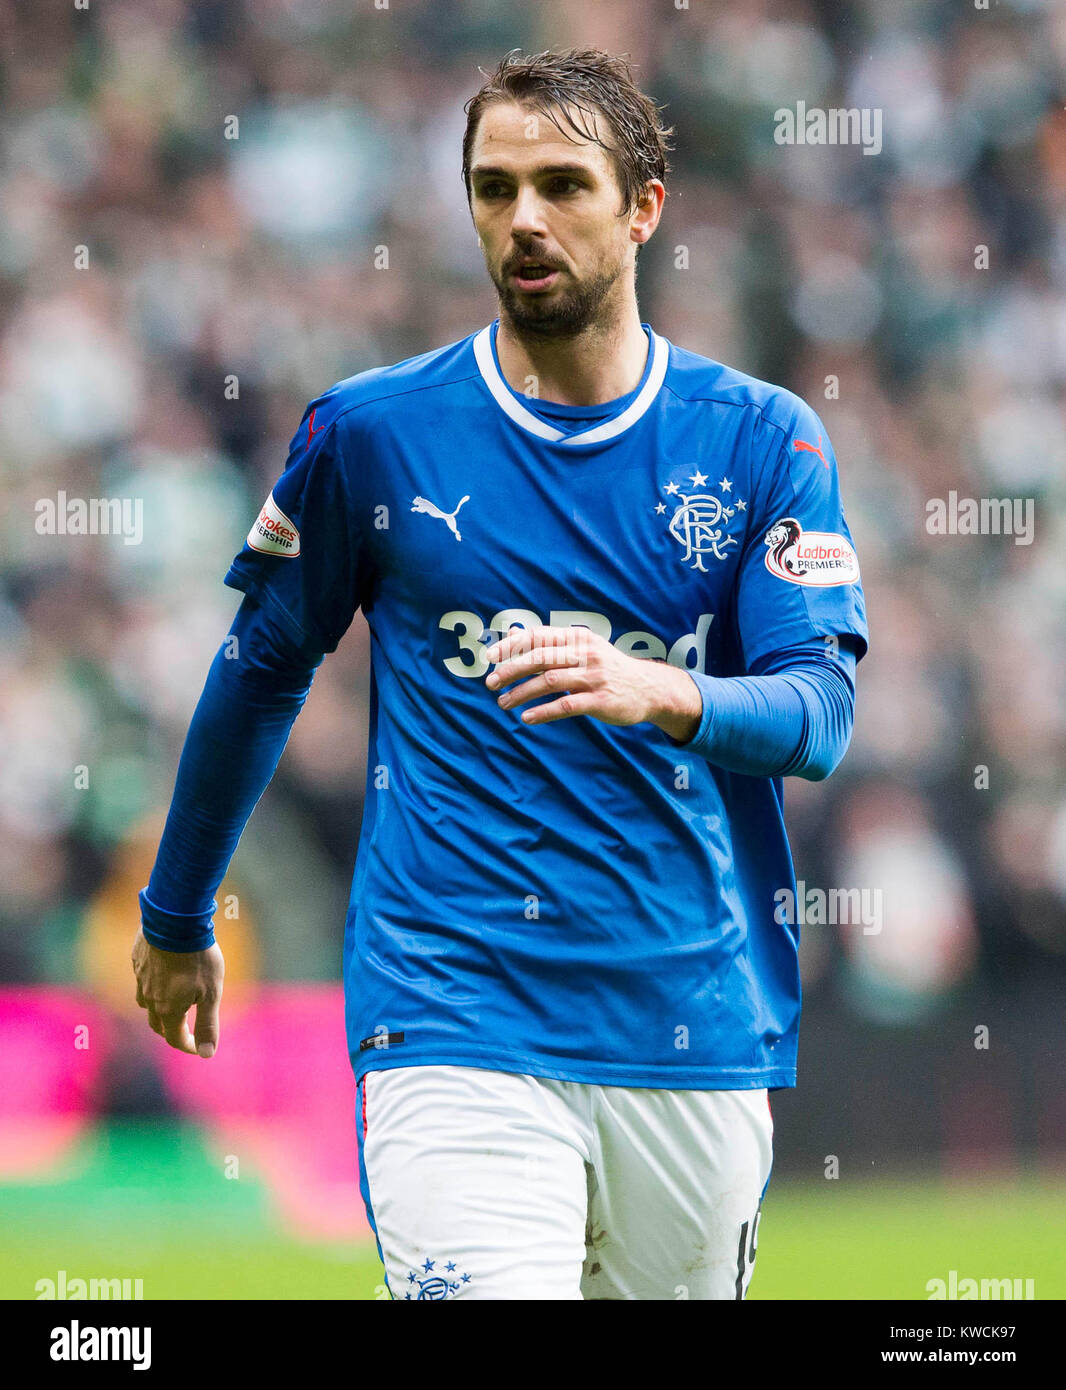 Rangers Niko Kranjcar during the Scottish Premiership match at Celtic Park, Glasgow. Stock Photo